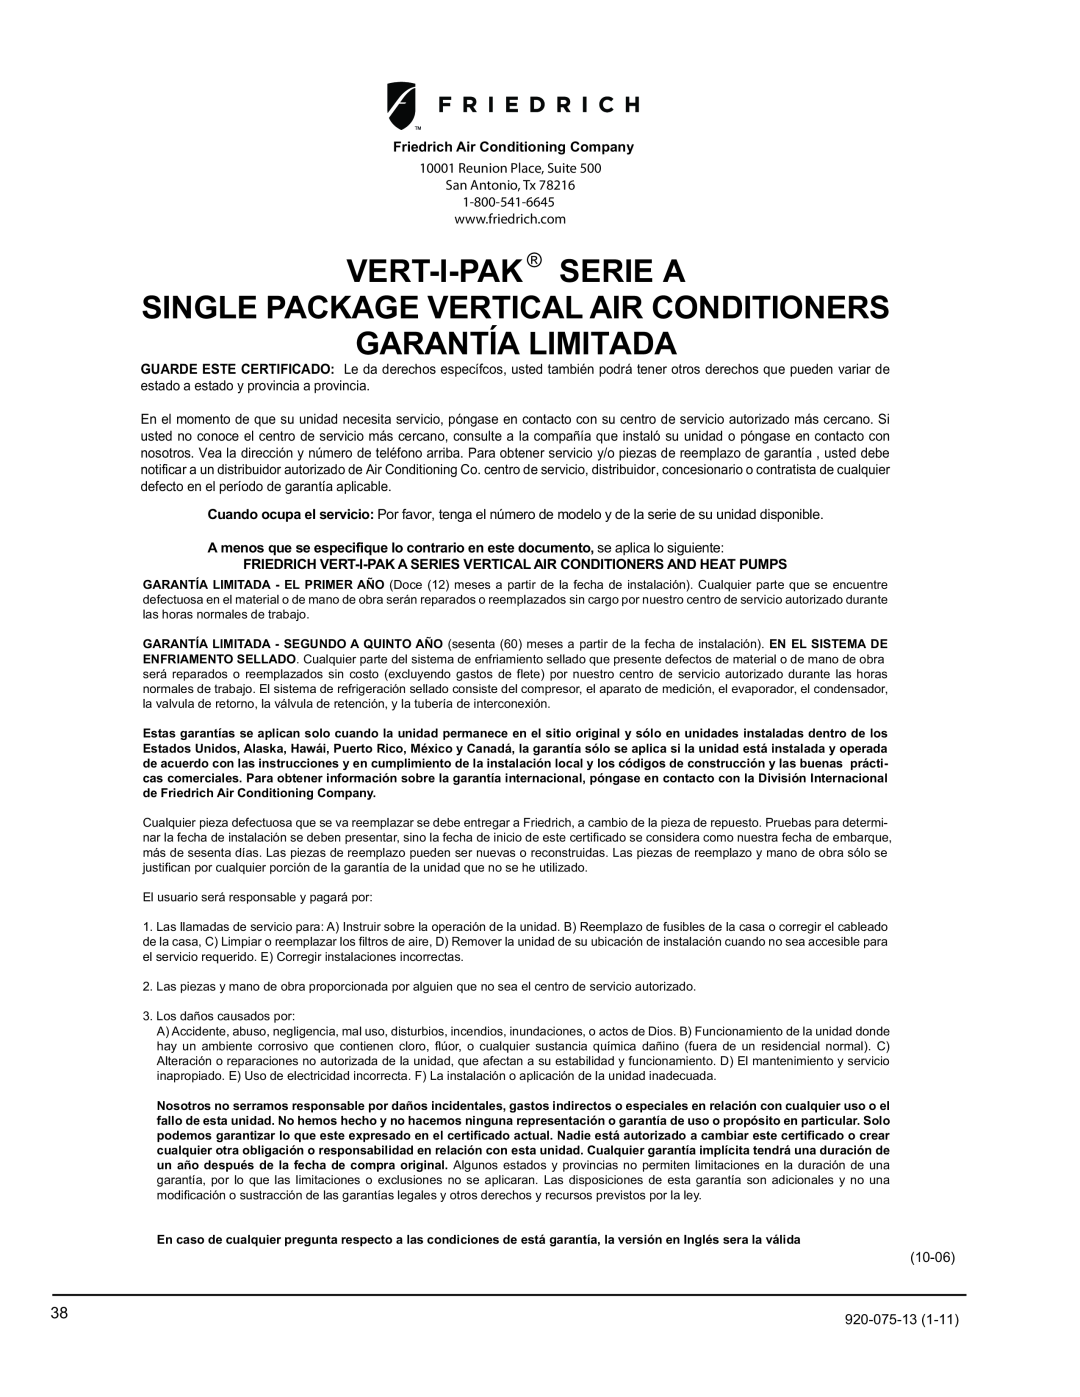 Friedrich 920-075-13 (1-11) Vert-I-Pak Serie A, Garantía Limitada, Single Package Vertical Air Conditioners 